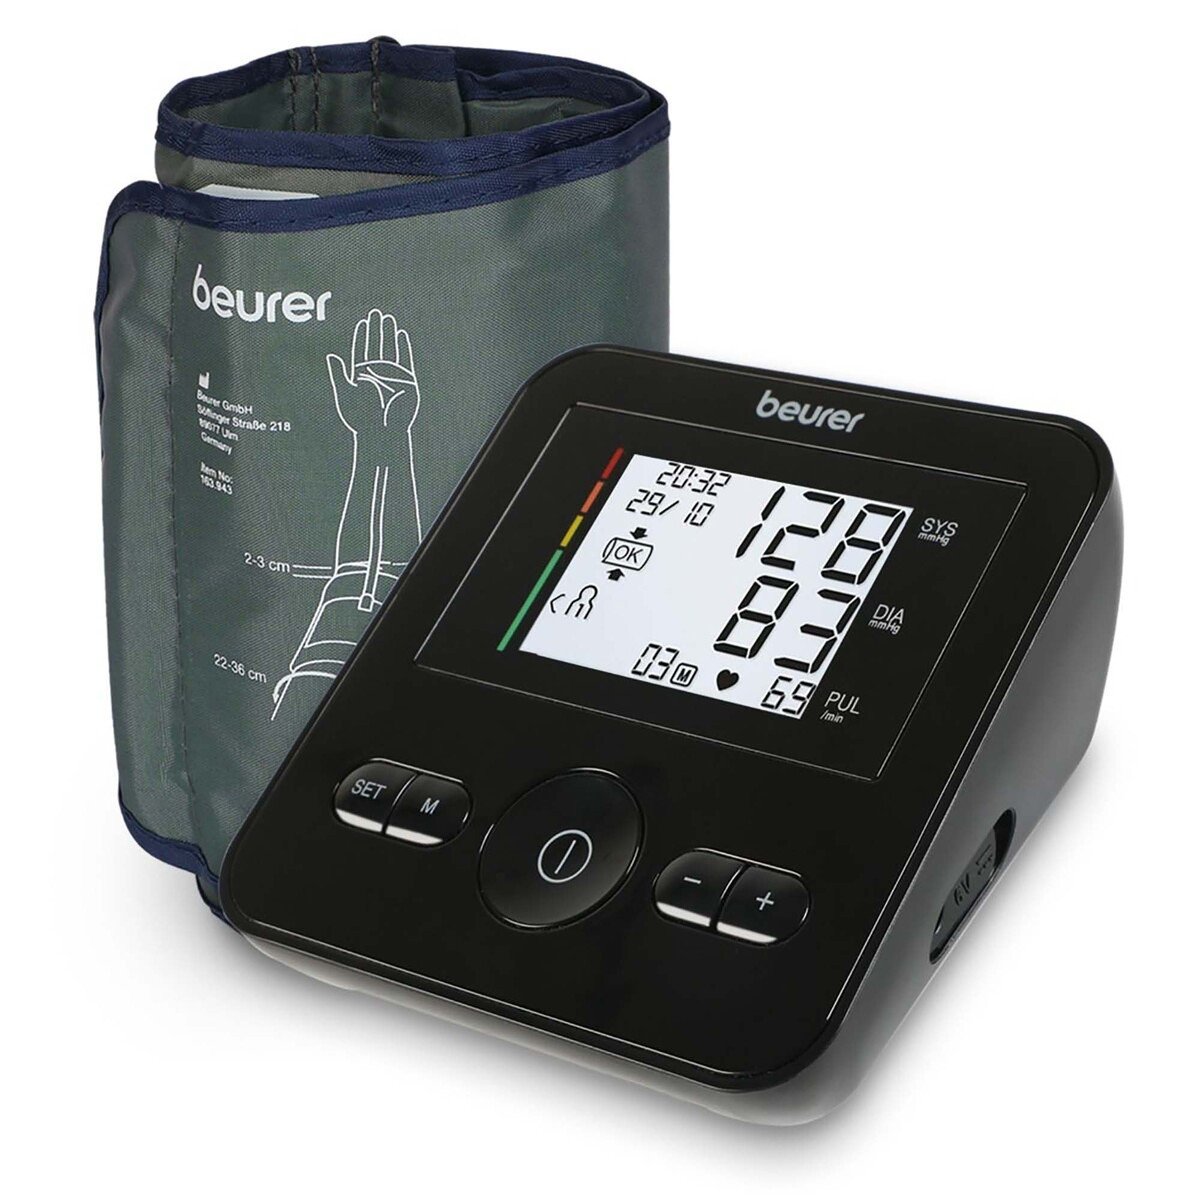  MbH Bluetooth Blood Pressure Monitor- Wireless Upper